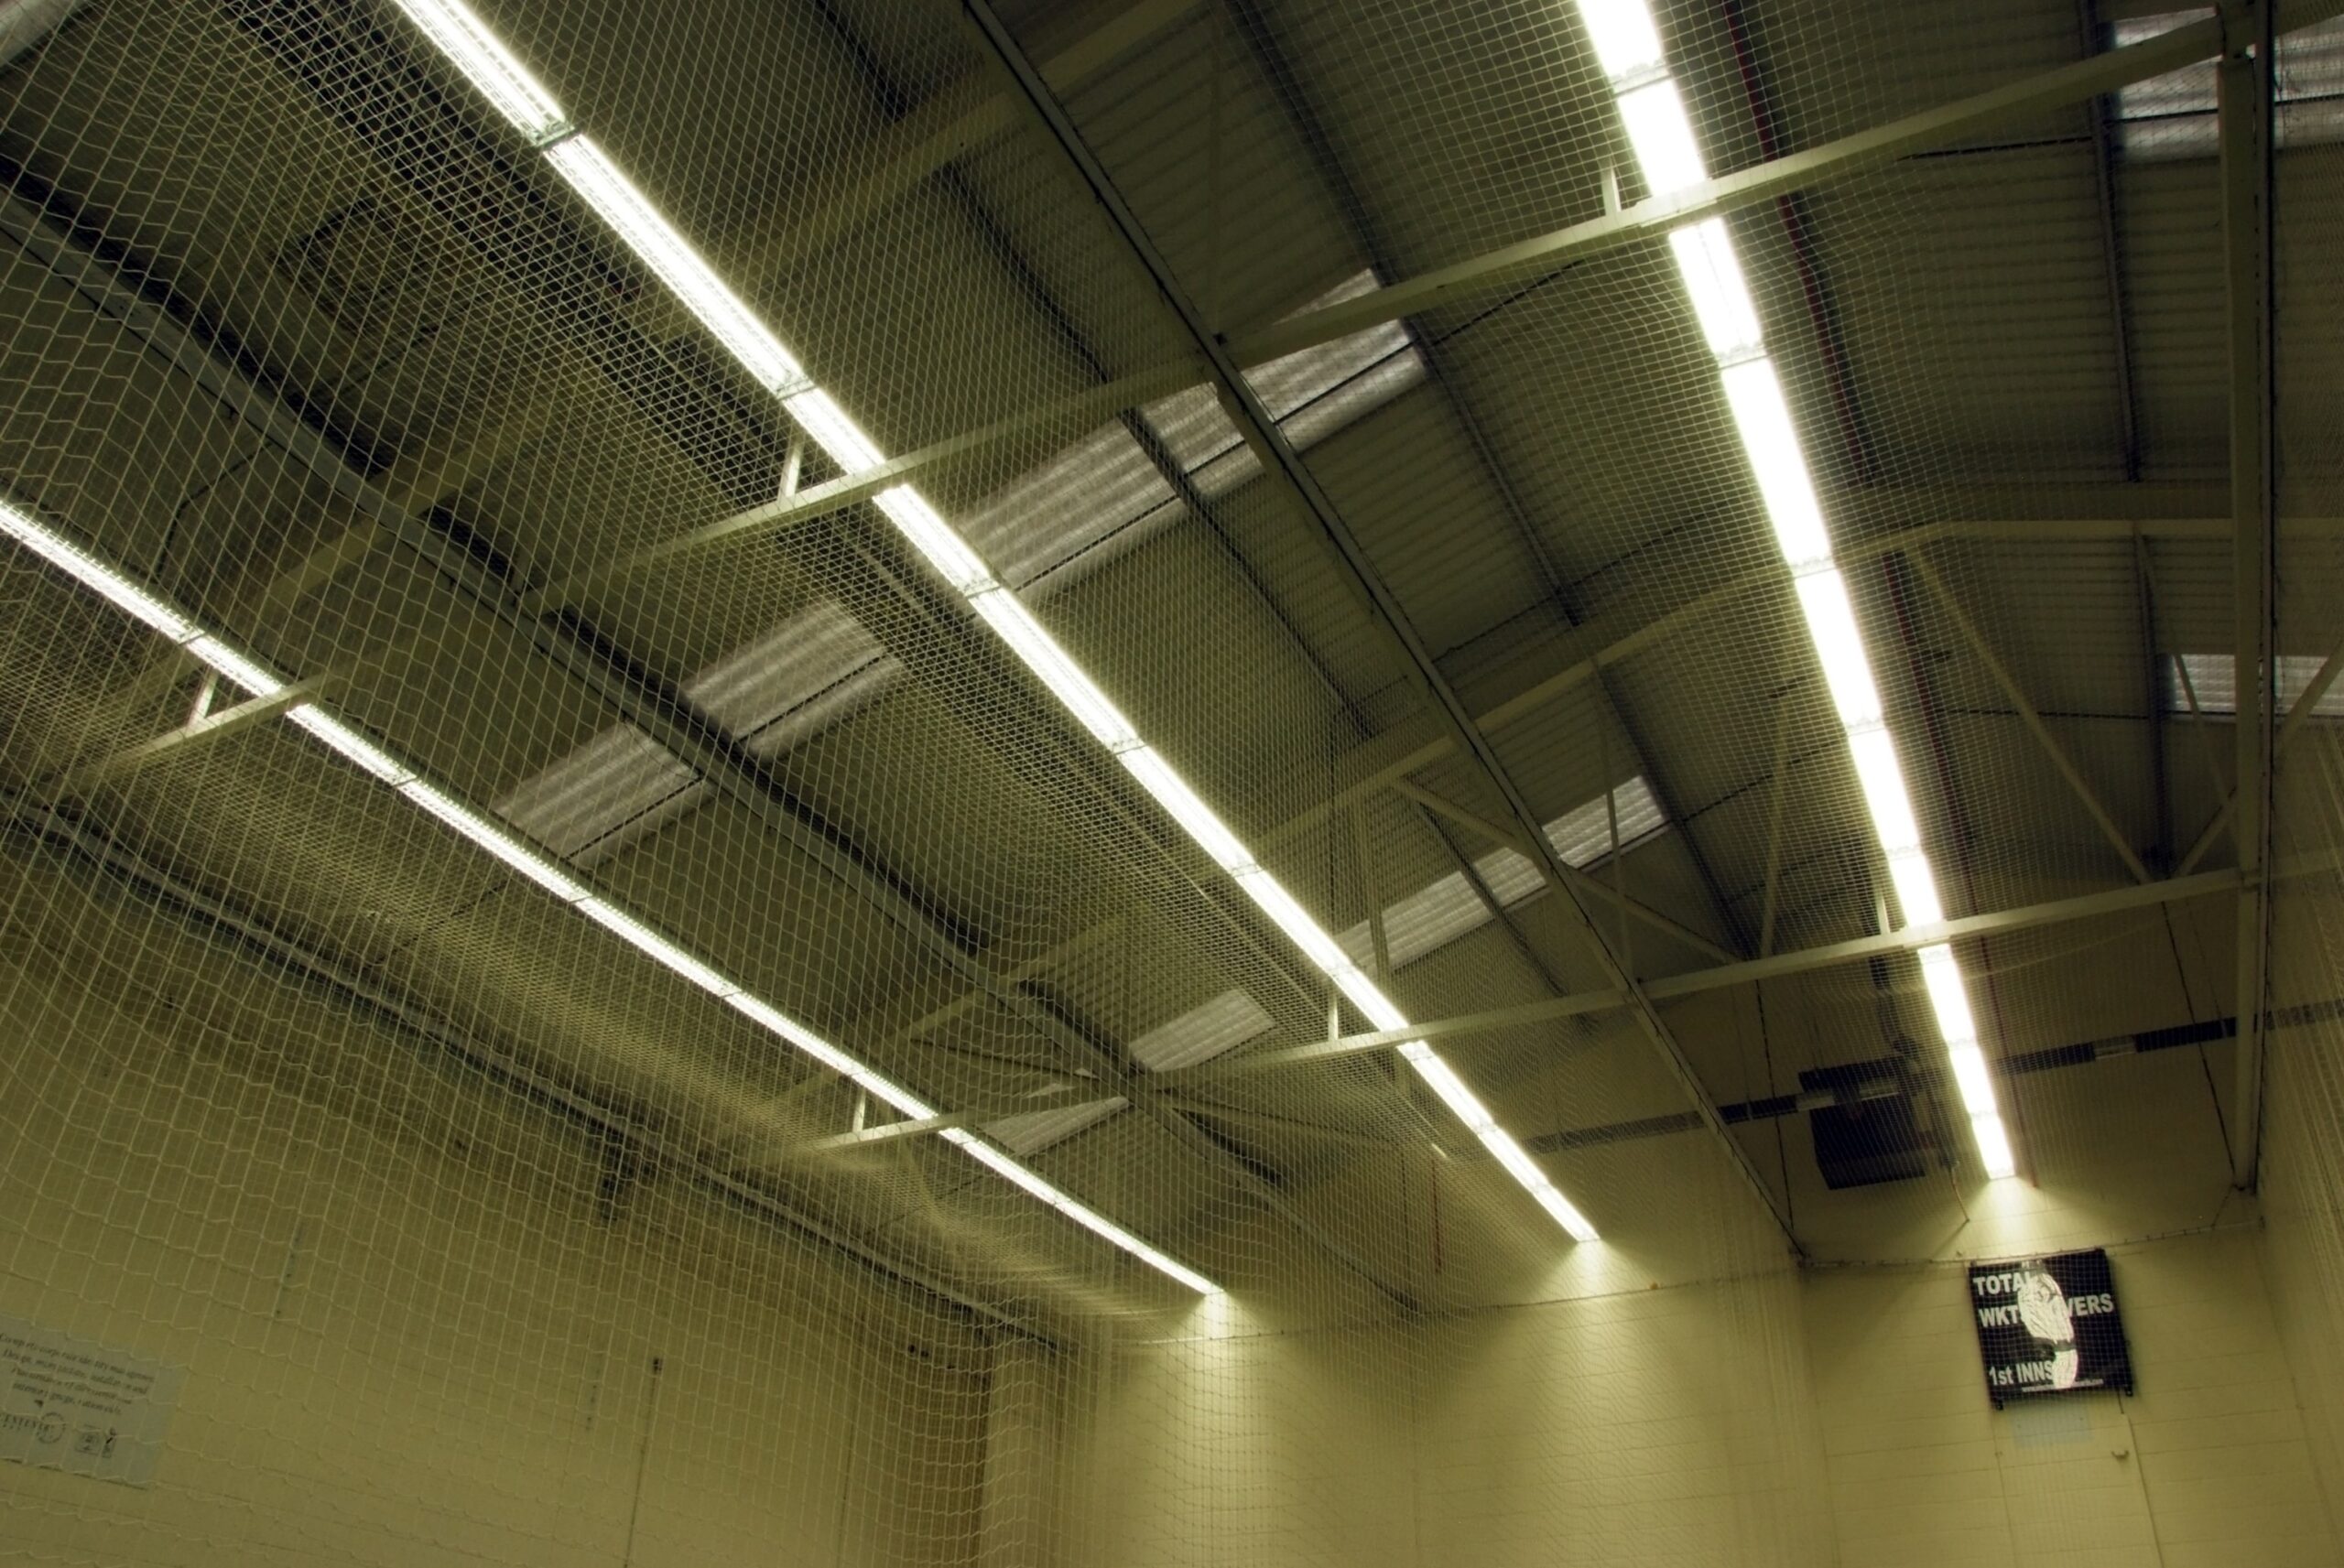 Tamlite Sheffield Hallam University sports hall lighting ceiling